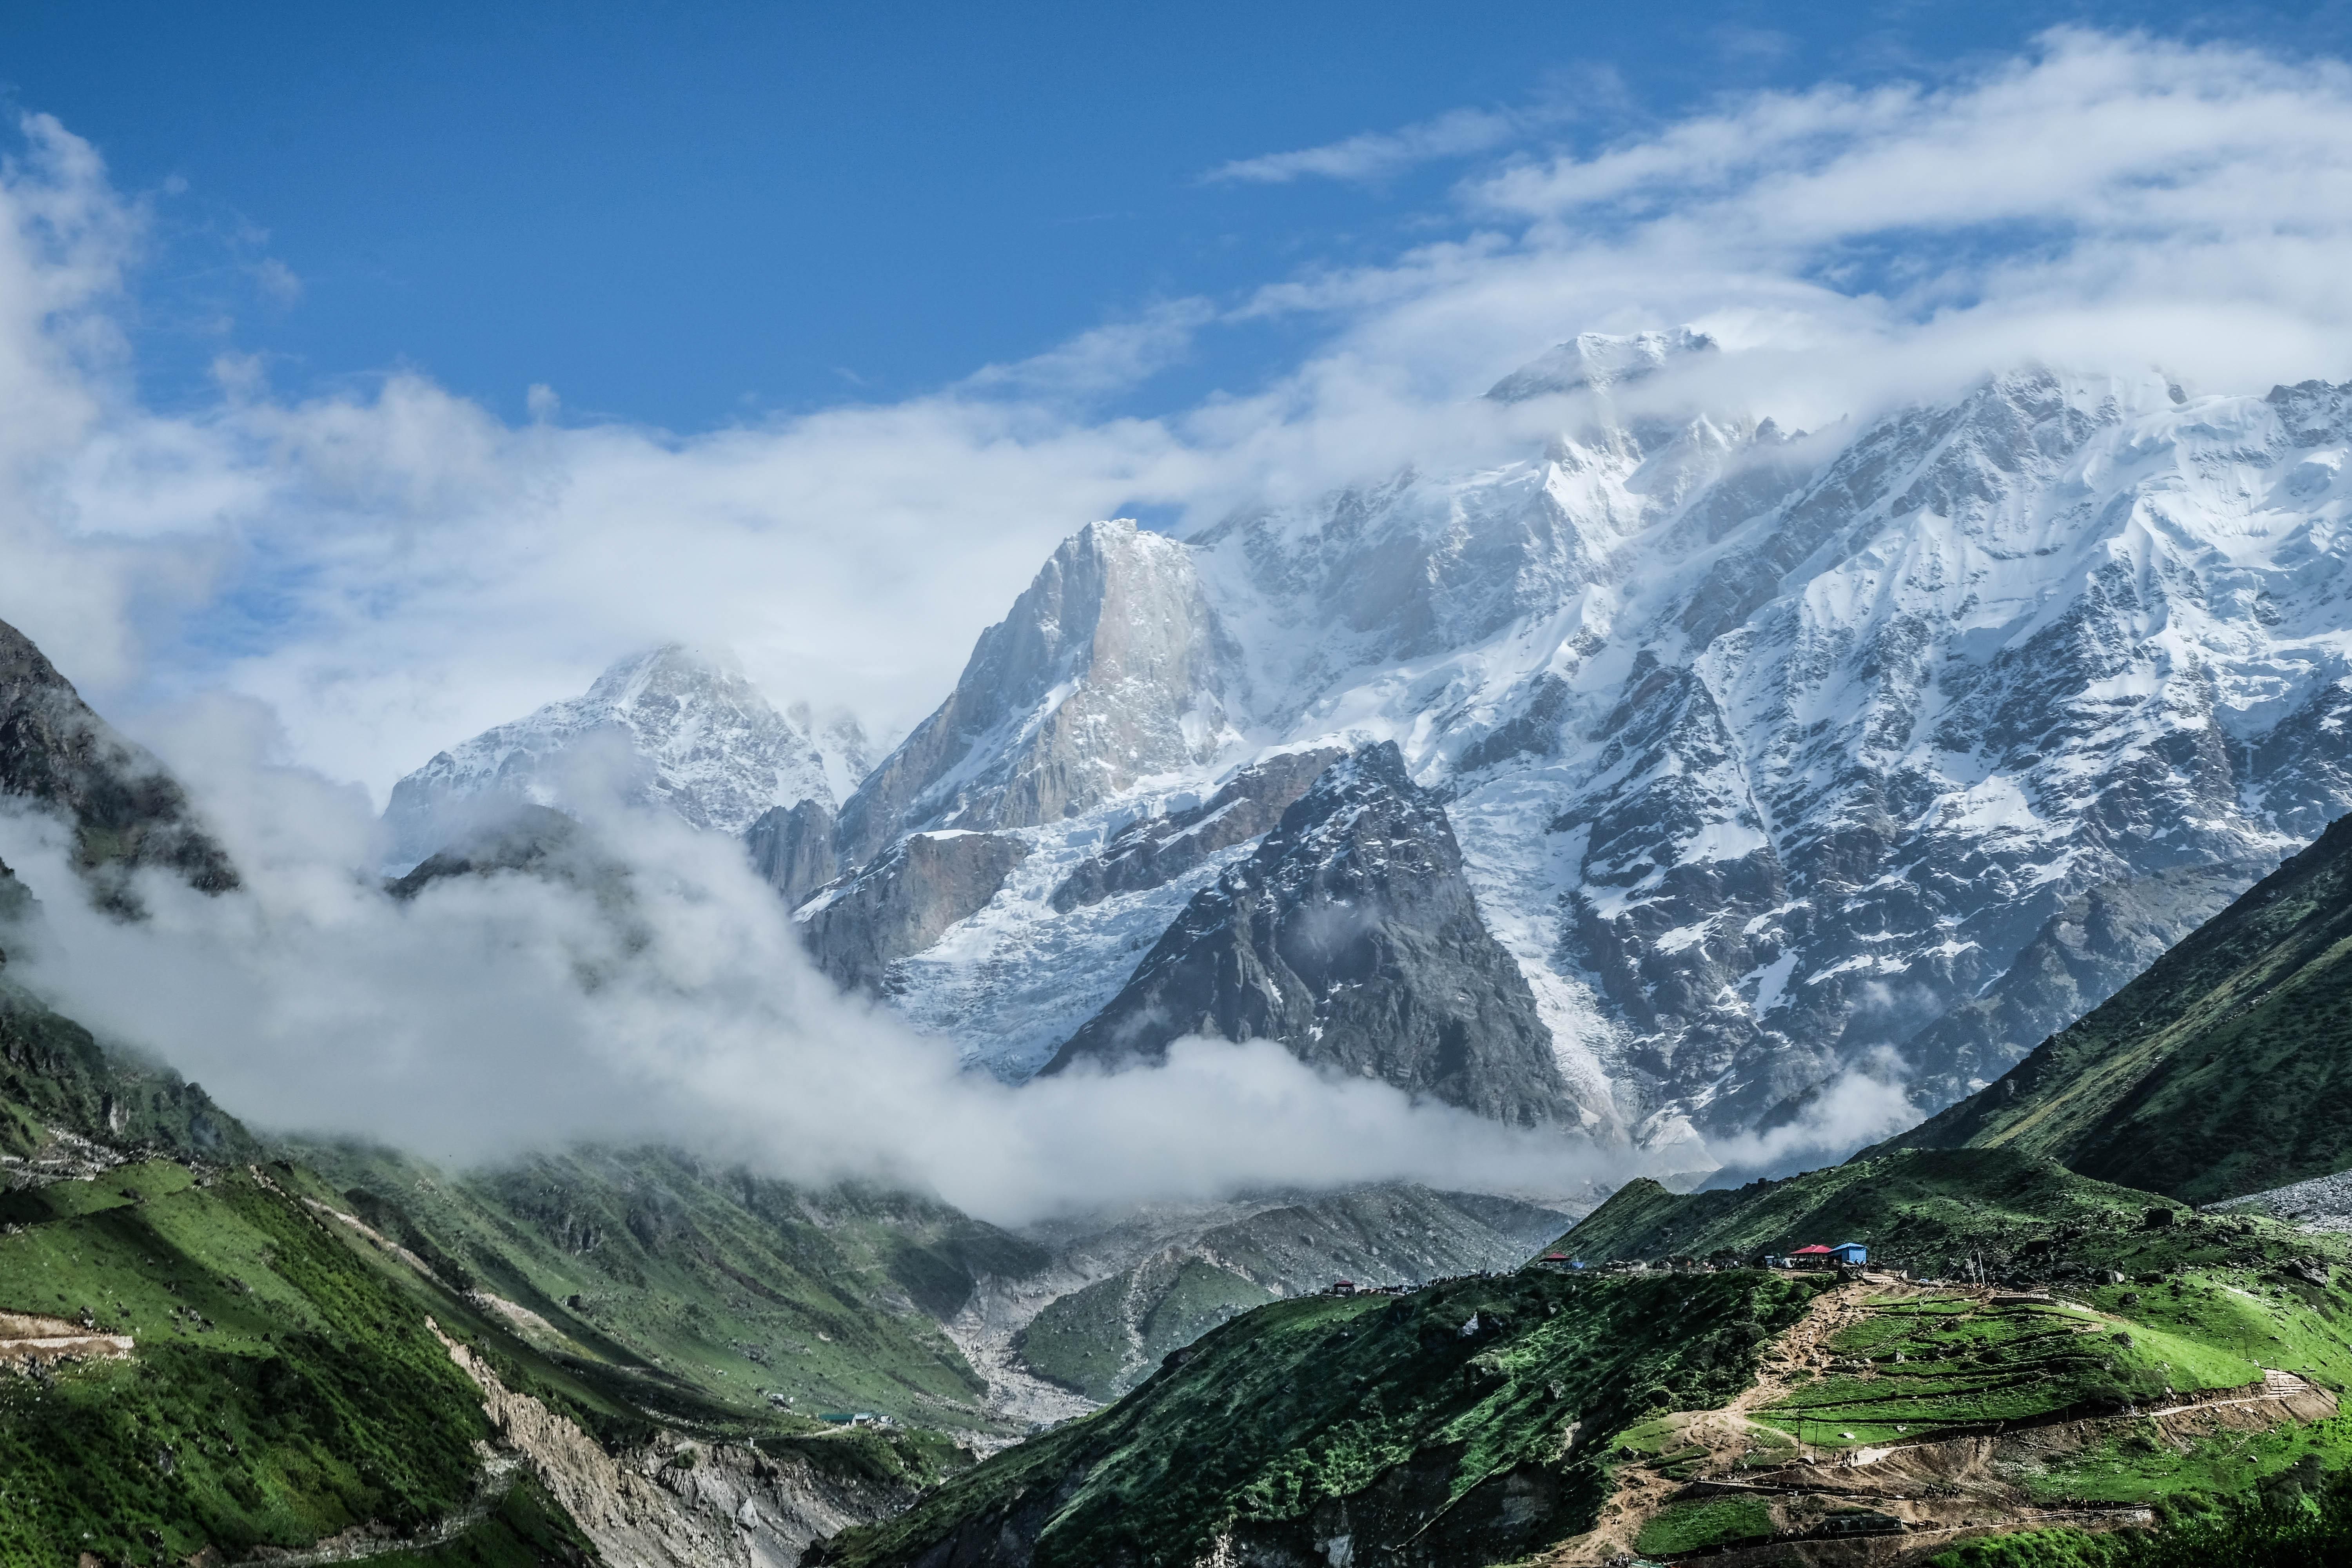 Breathtaking view of the Kedarnath Peak. [OC][6000 x 4000]